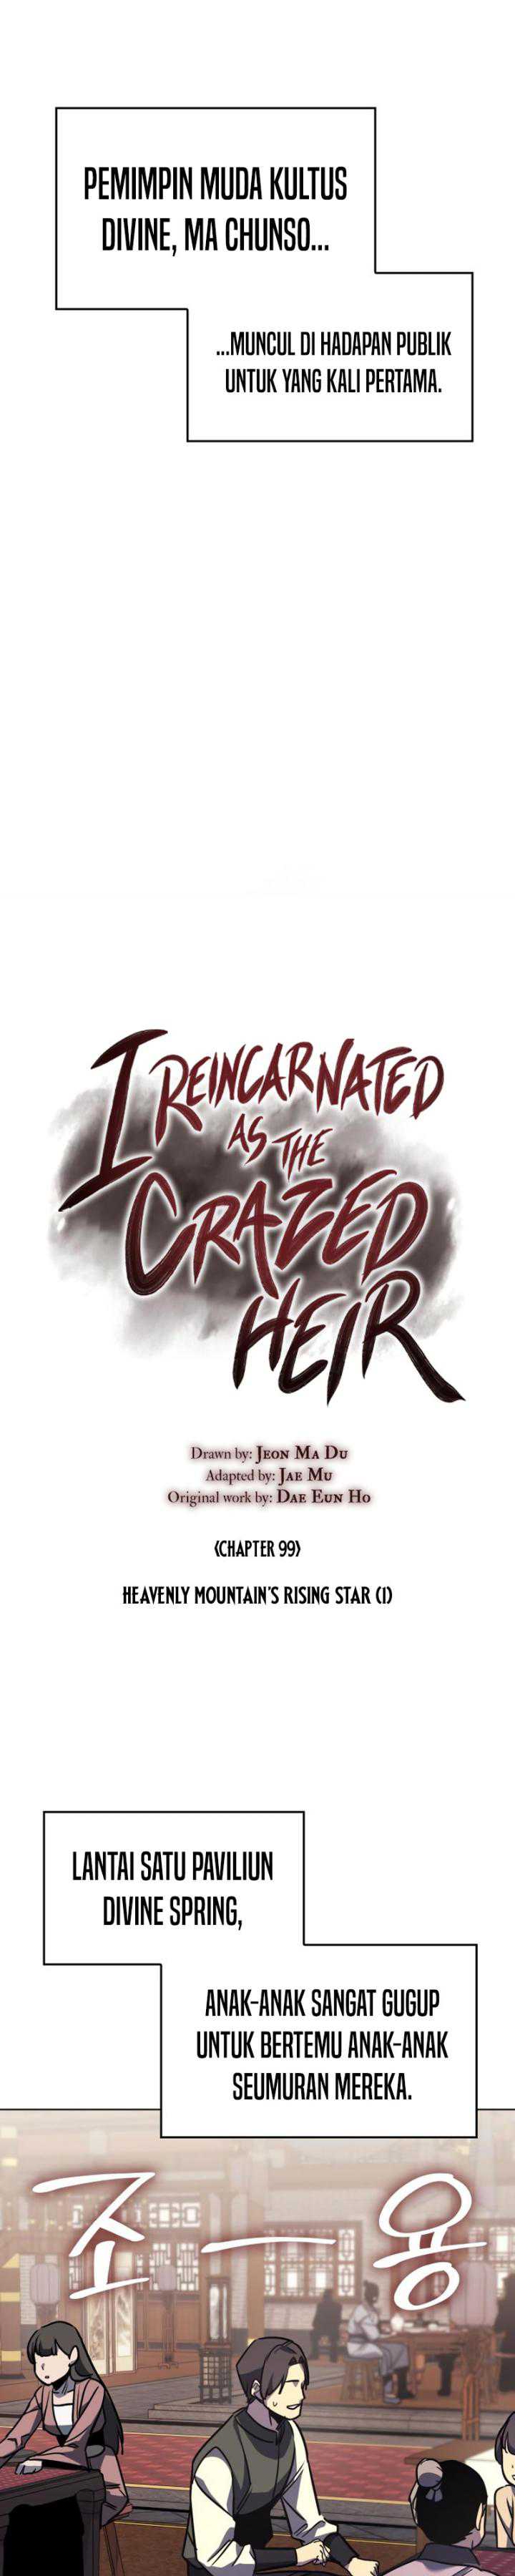 I Reincarnated As the Crazed Heir Chapter 99